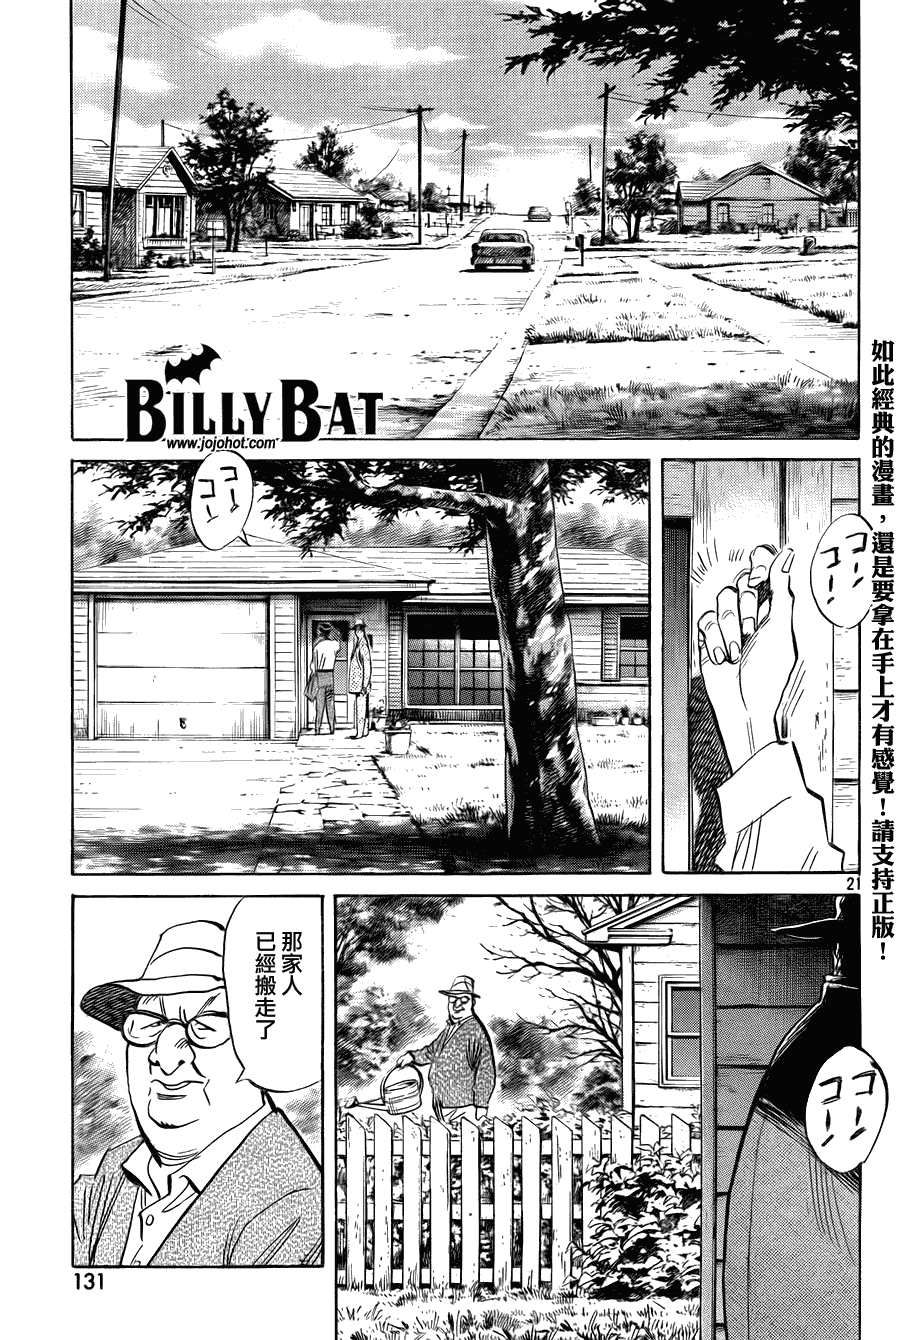 Billy_Bat - 第43话 - 1